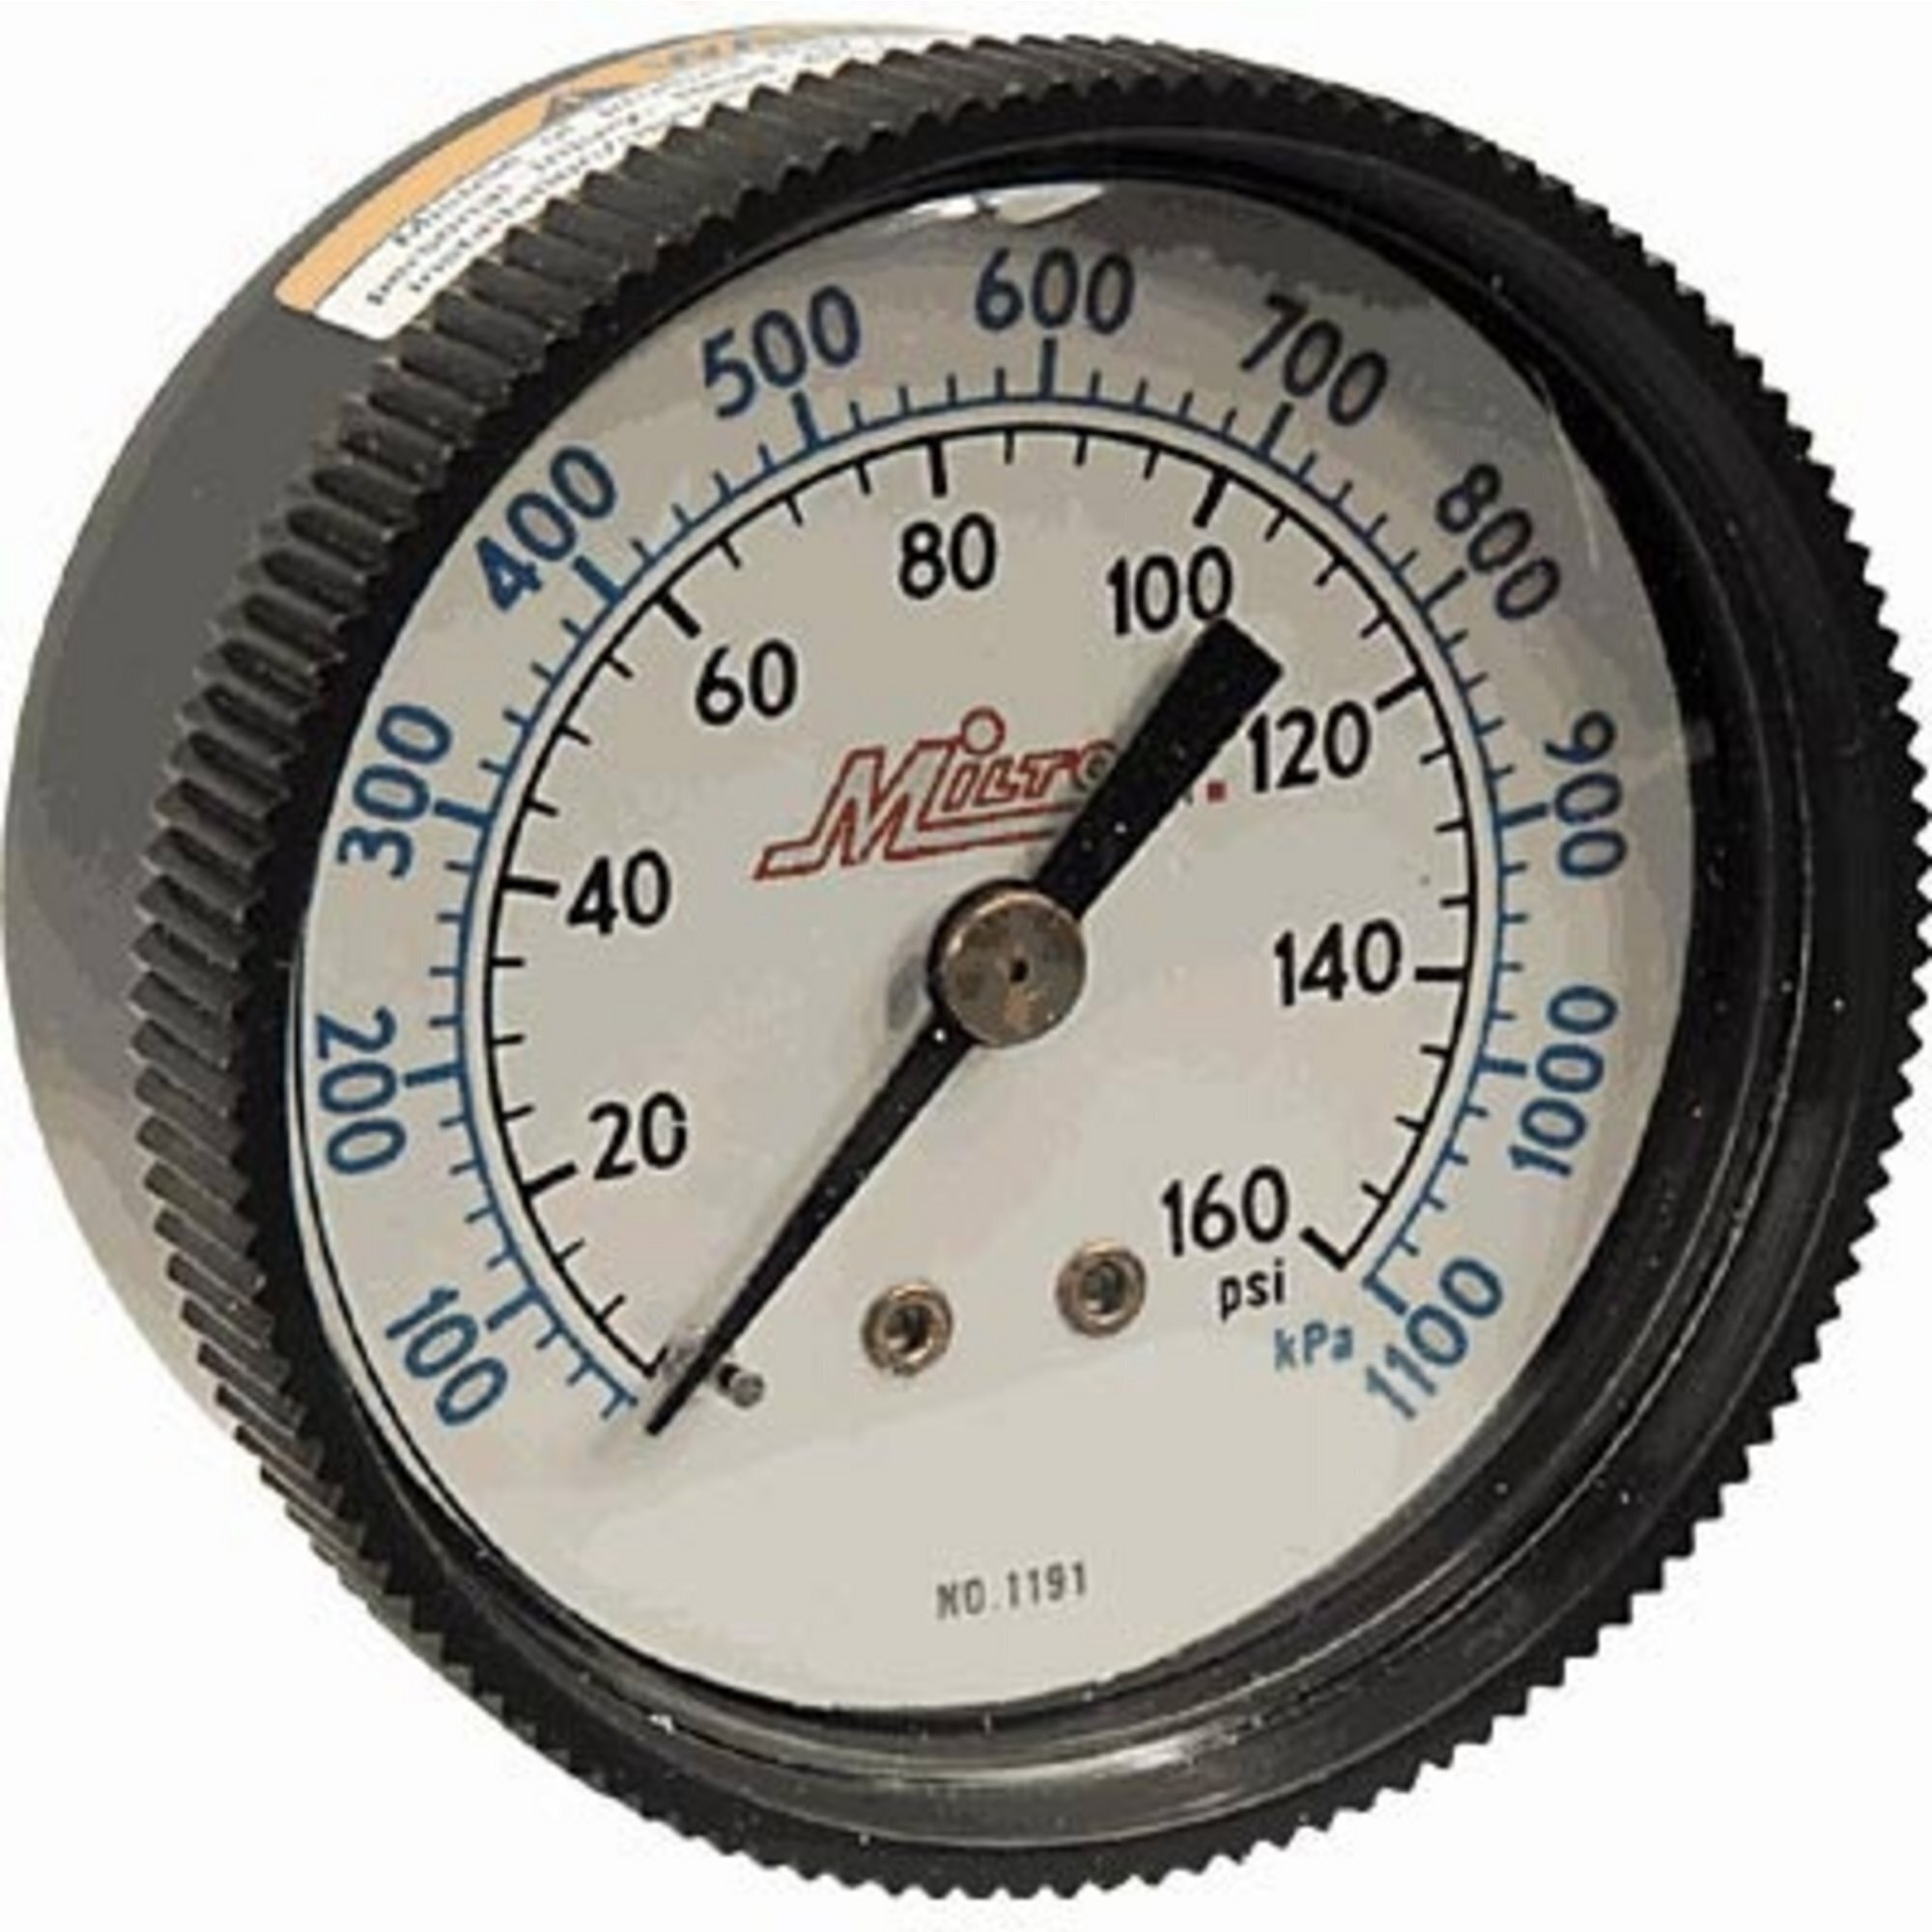 Milton Mini Air Pressure Gauge 1/4Inch NPT Inlet, 0-160 PSI, Center Mount, Model 1191